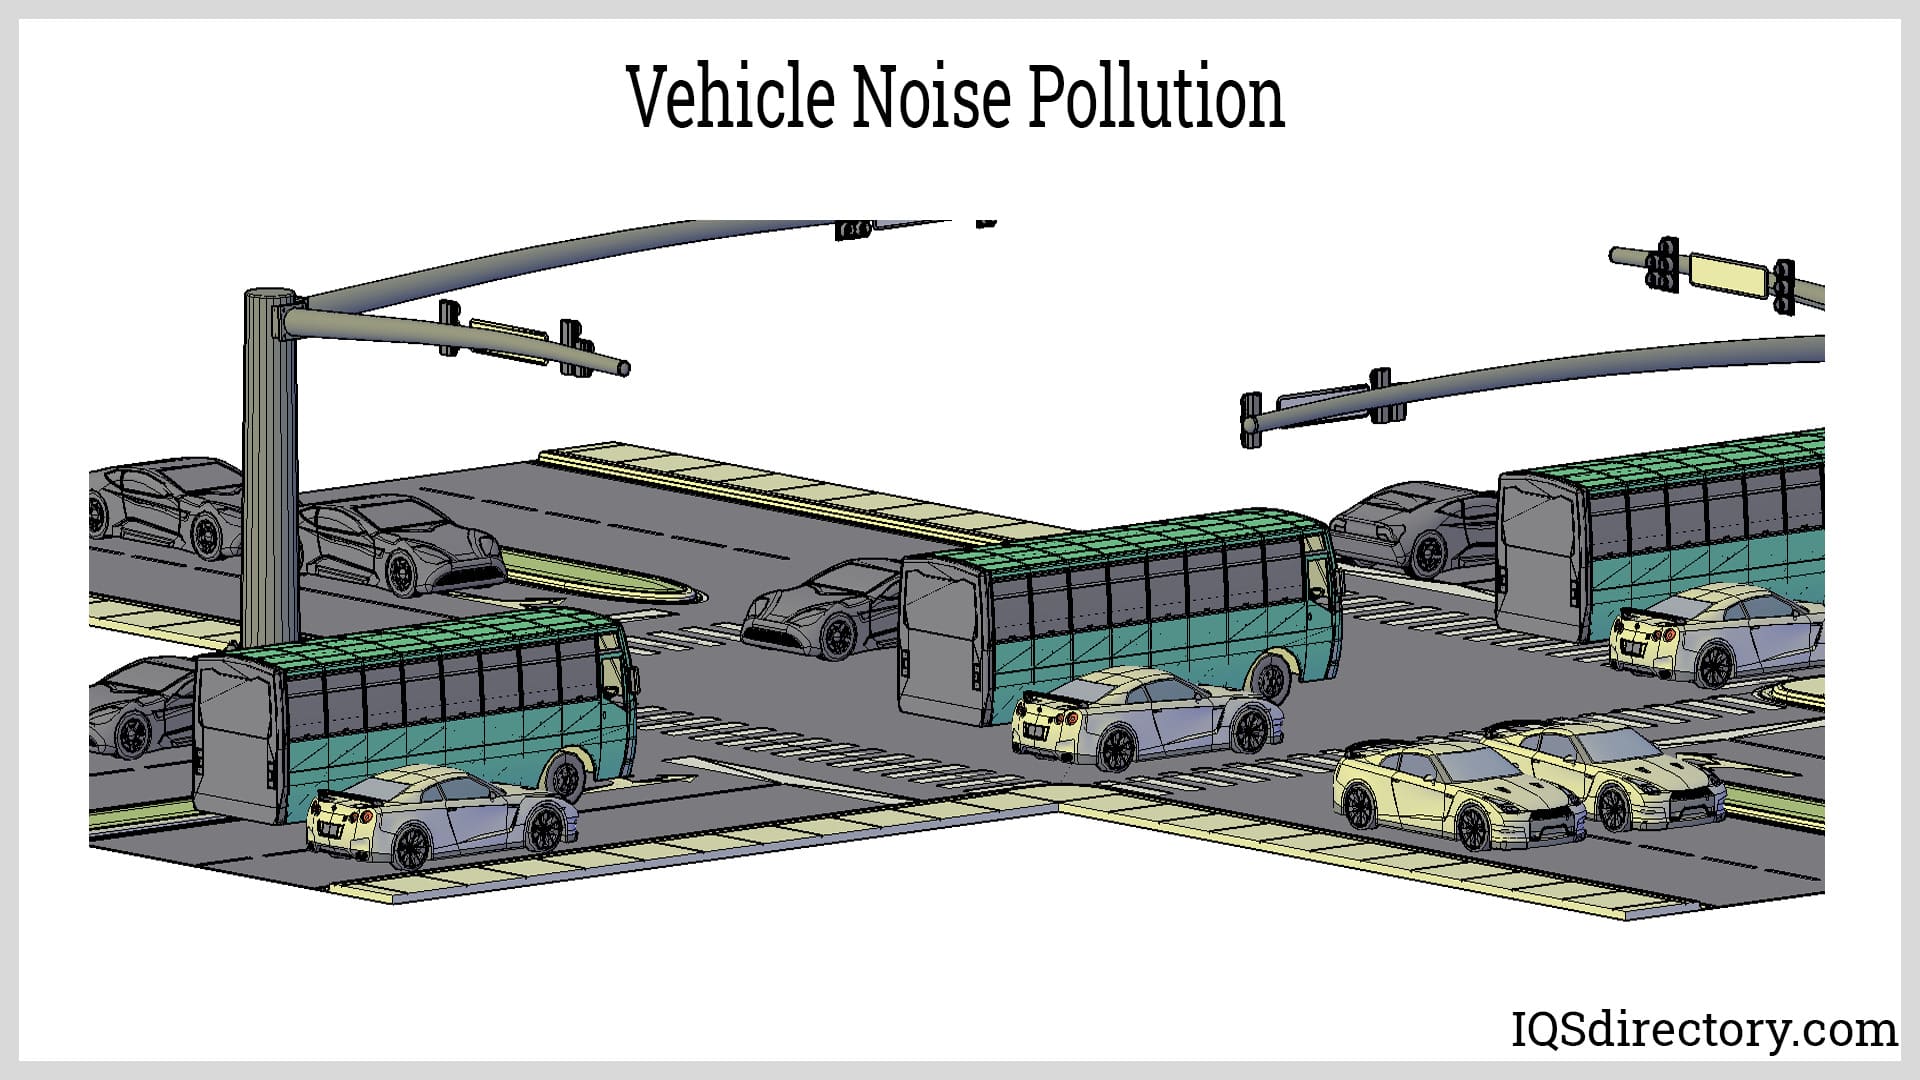 Vehicle Noise Pollution